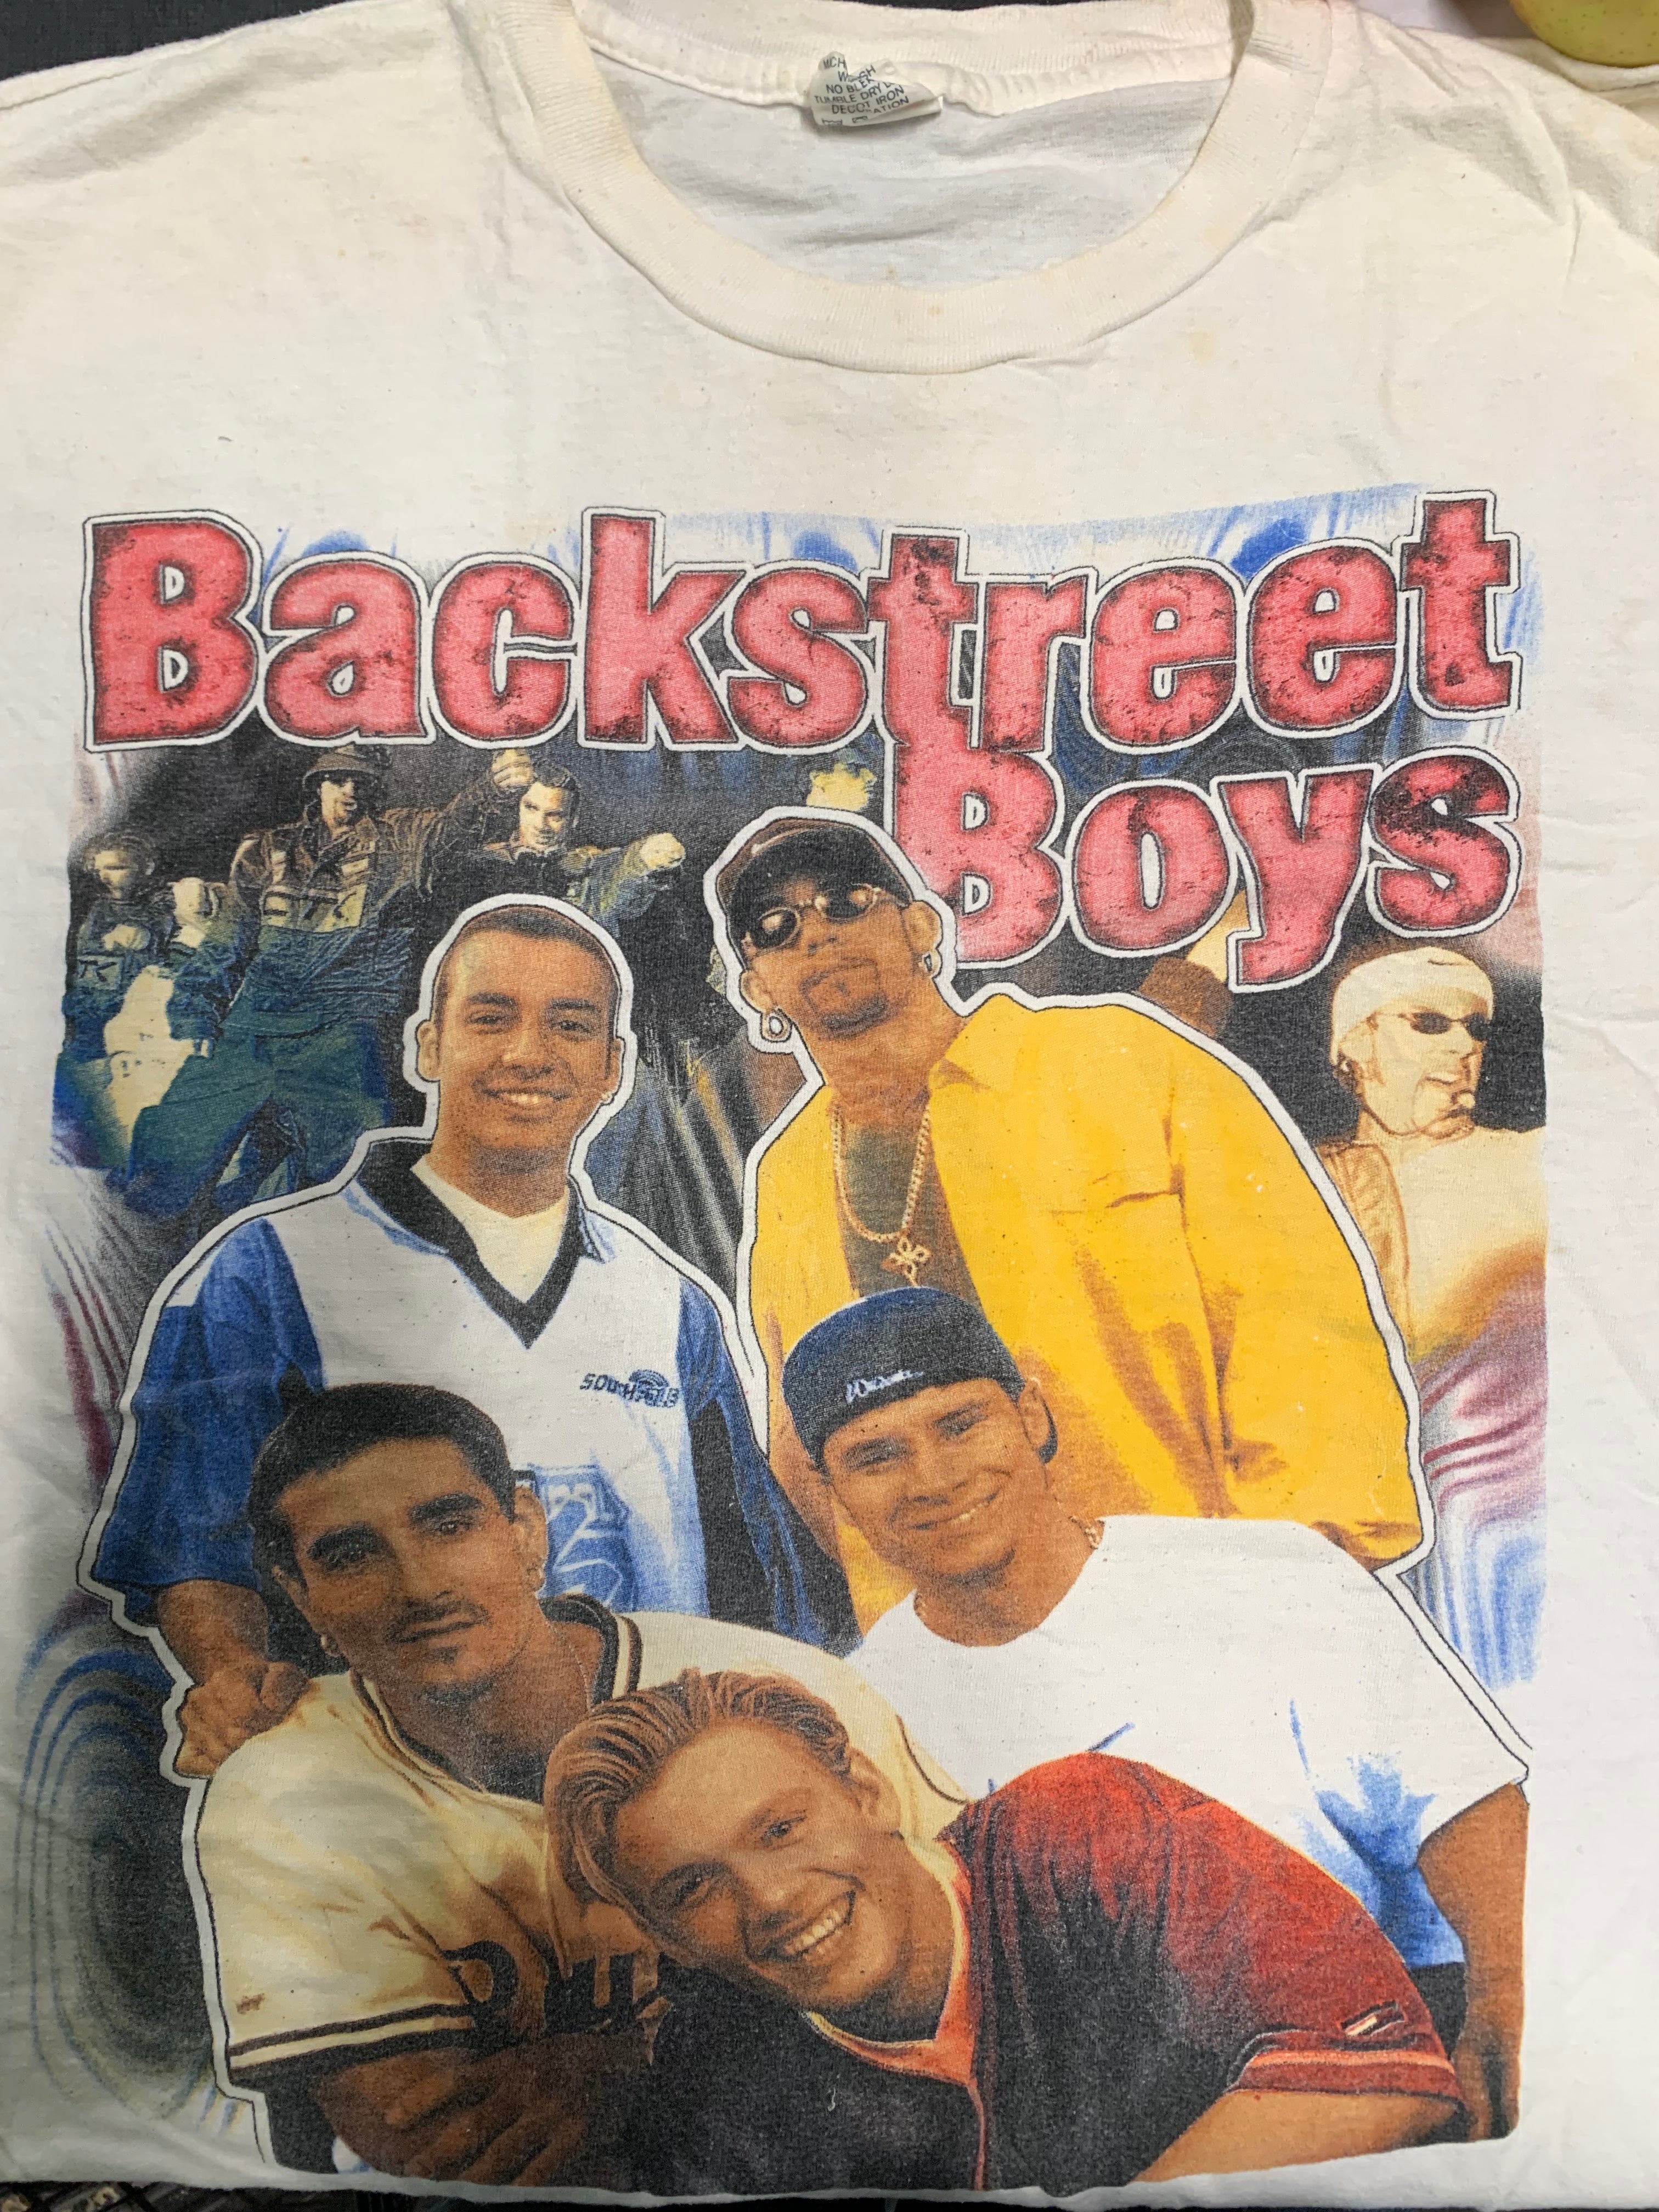 Backstreet Boys Group Shot T-Shirt, White (See Description), XL